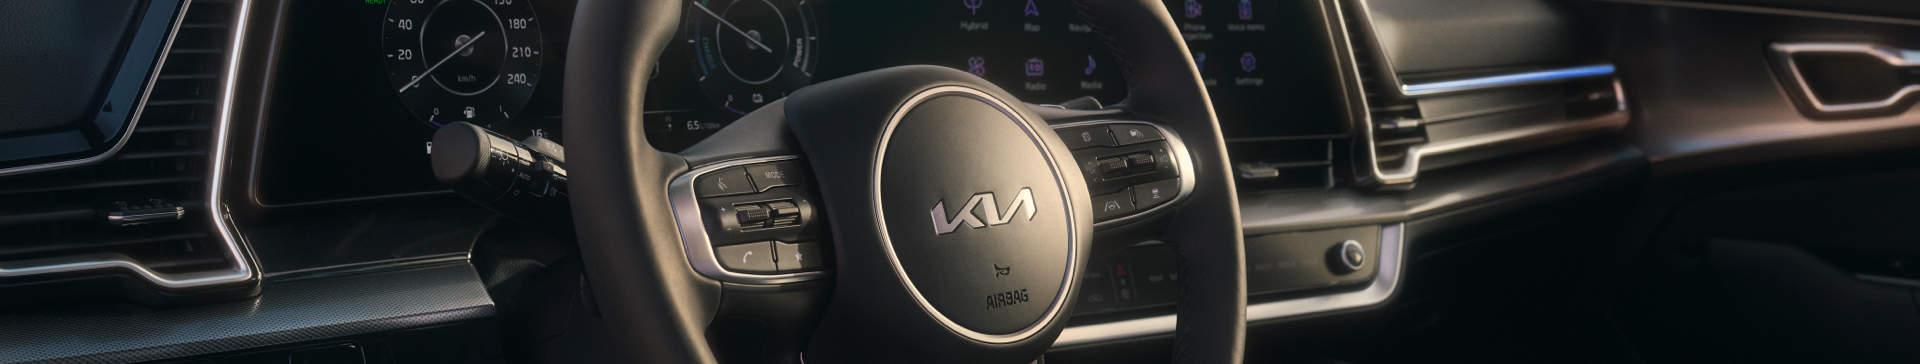 Kia Drive Wise key image with logo